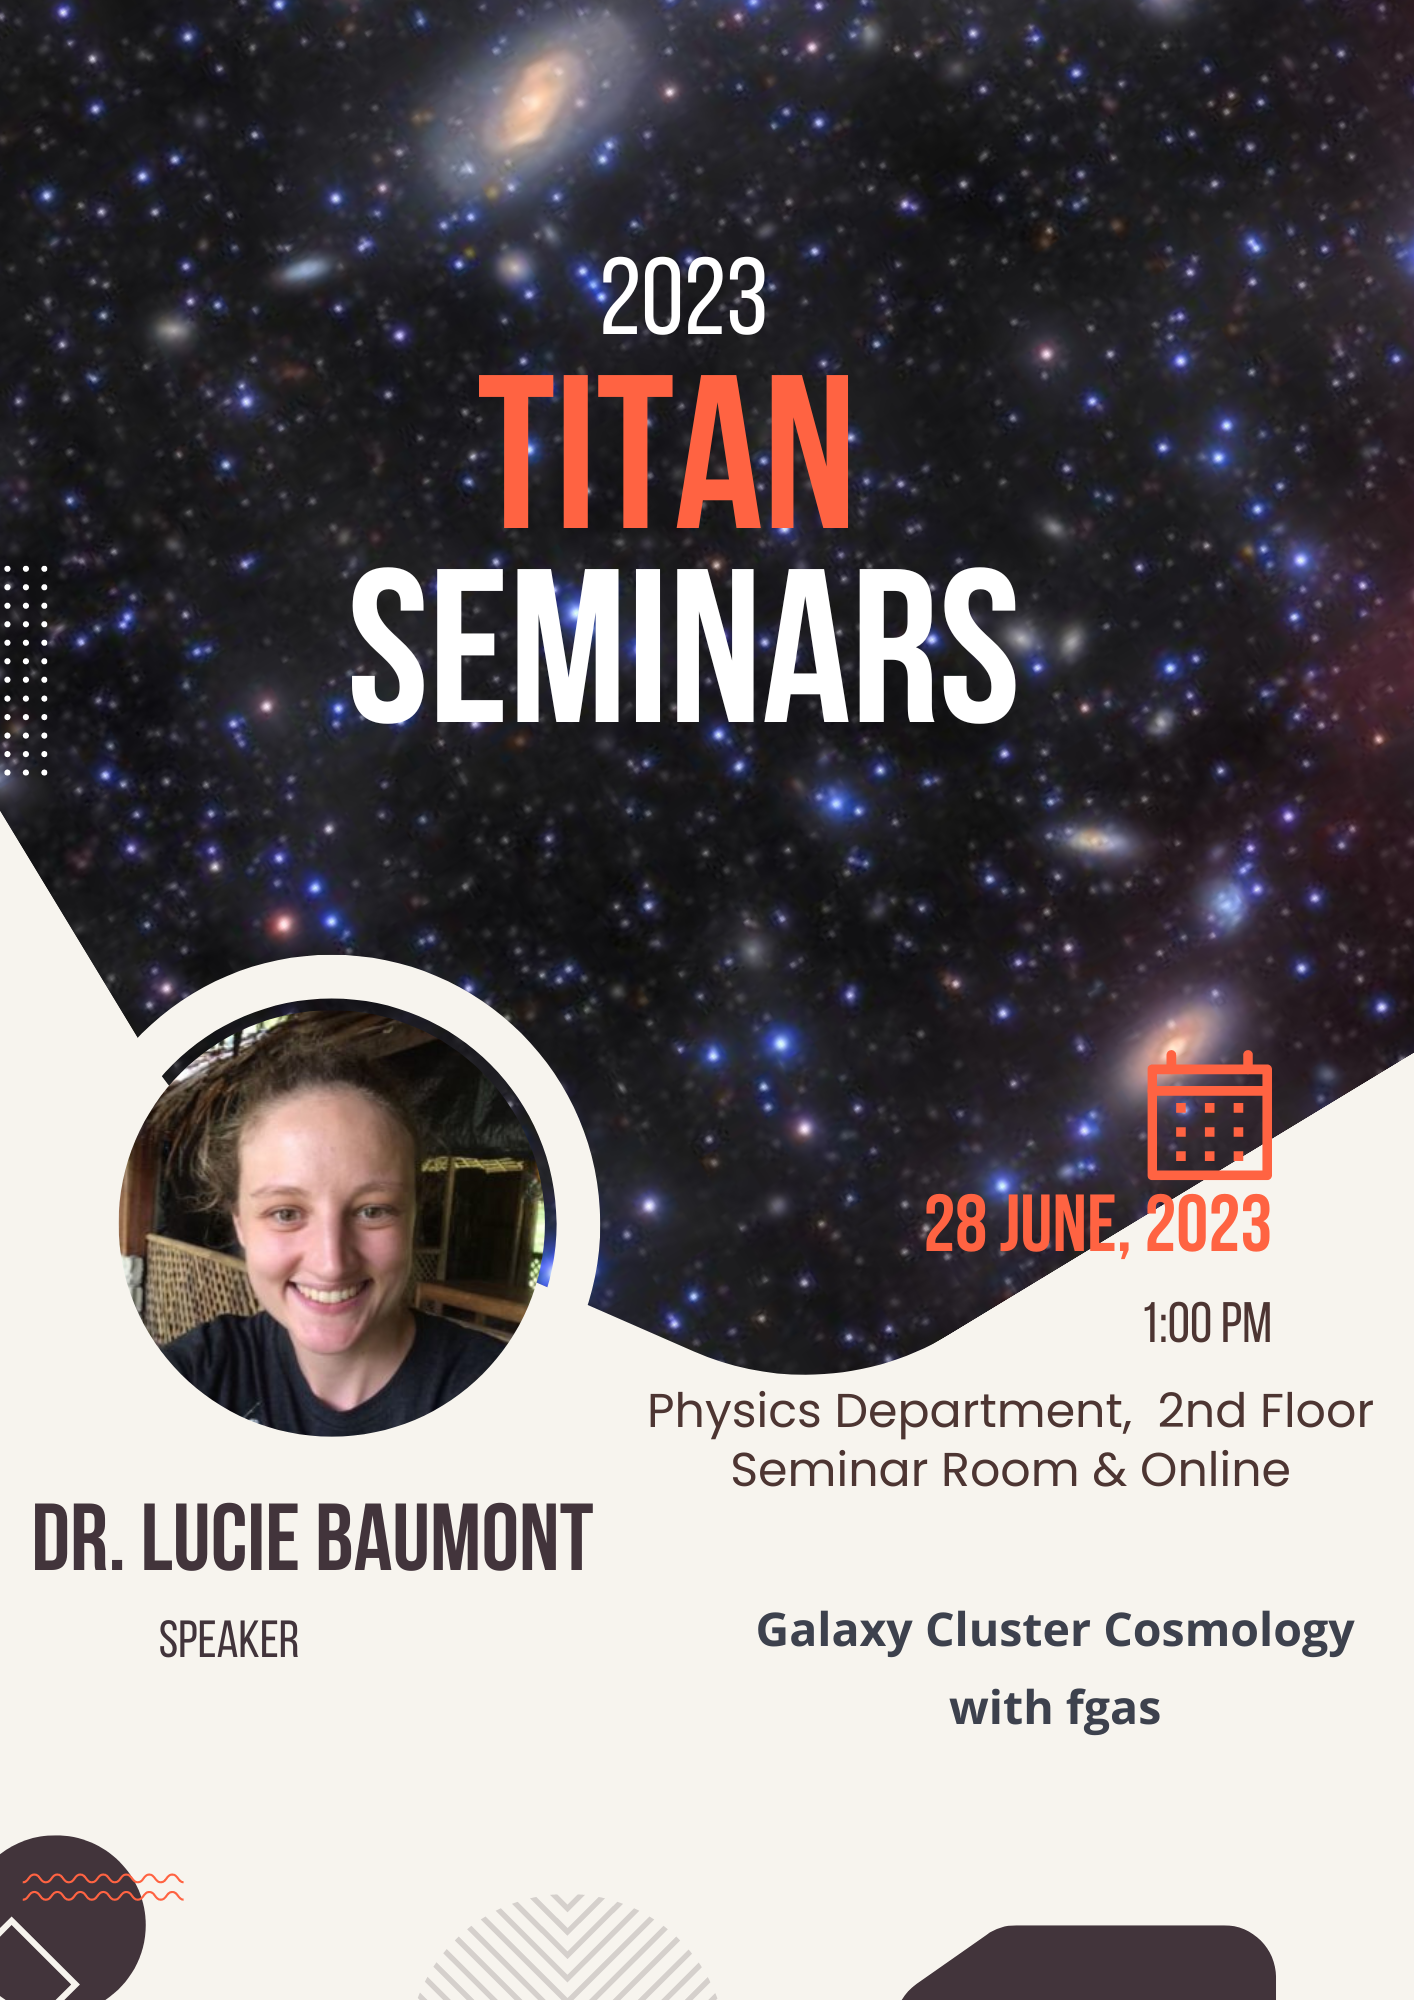 Seminar: Galaxy Cluster Cosmology with fgas